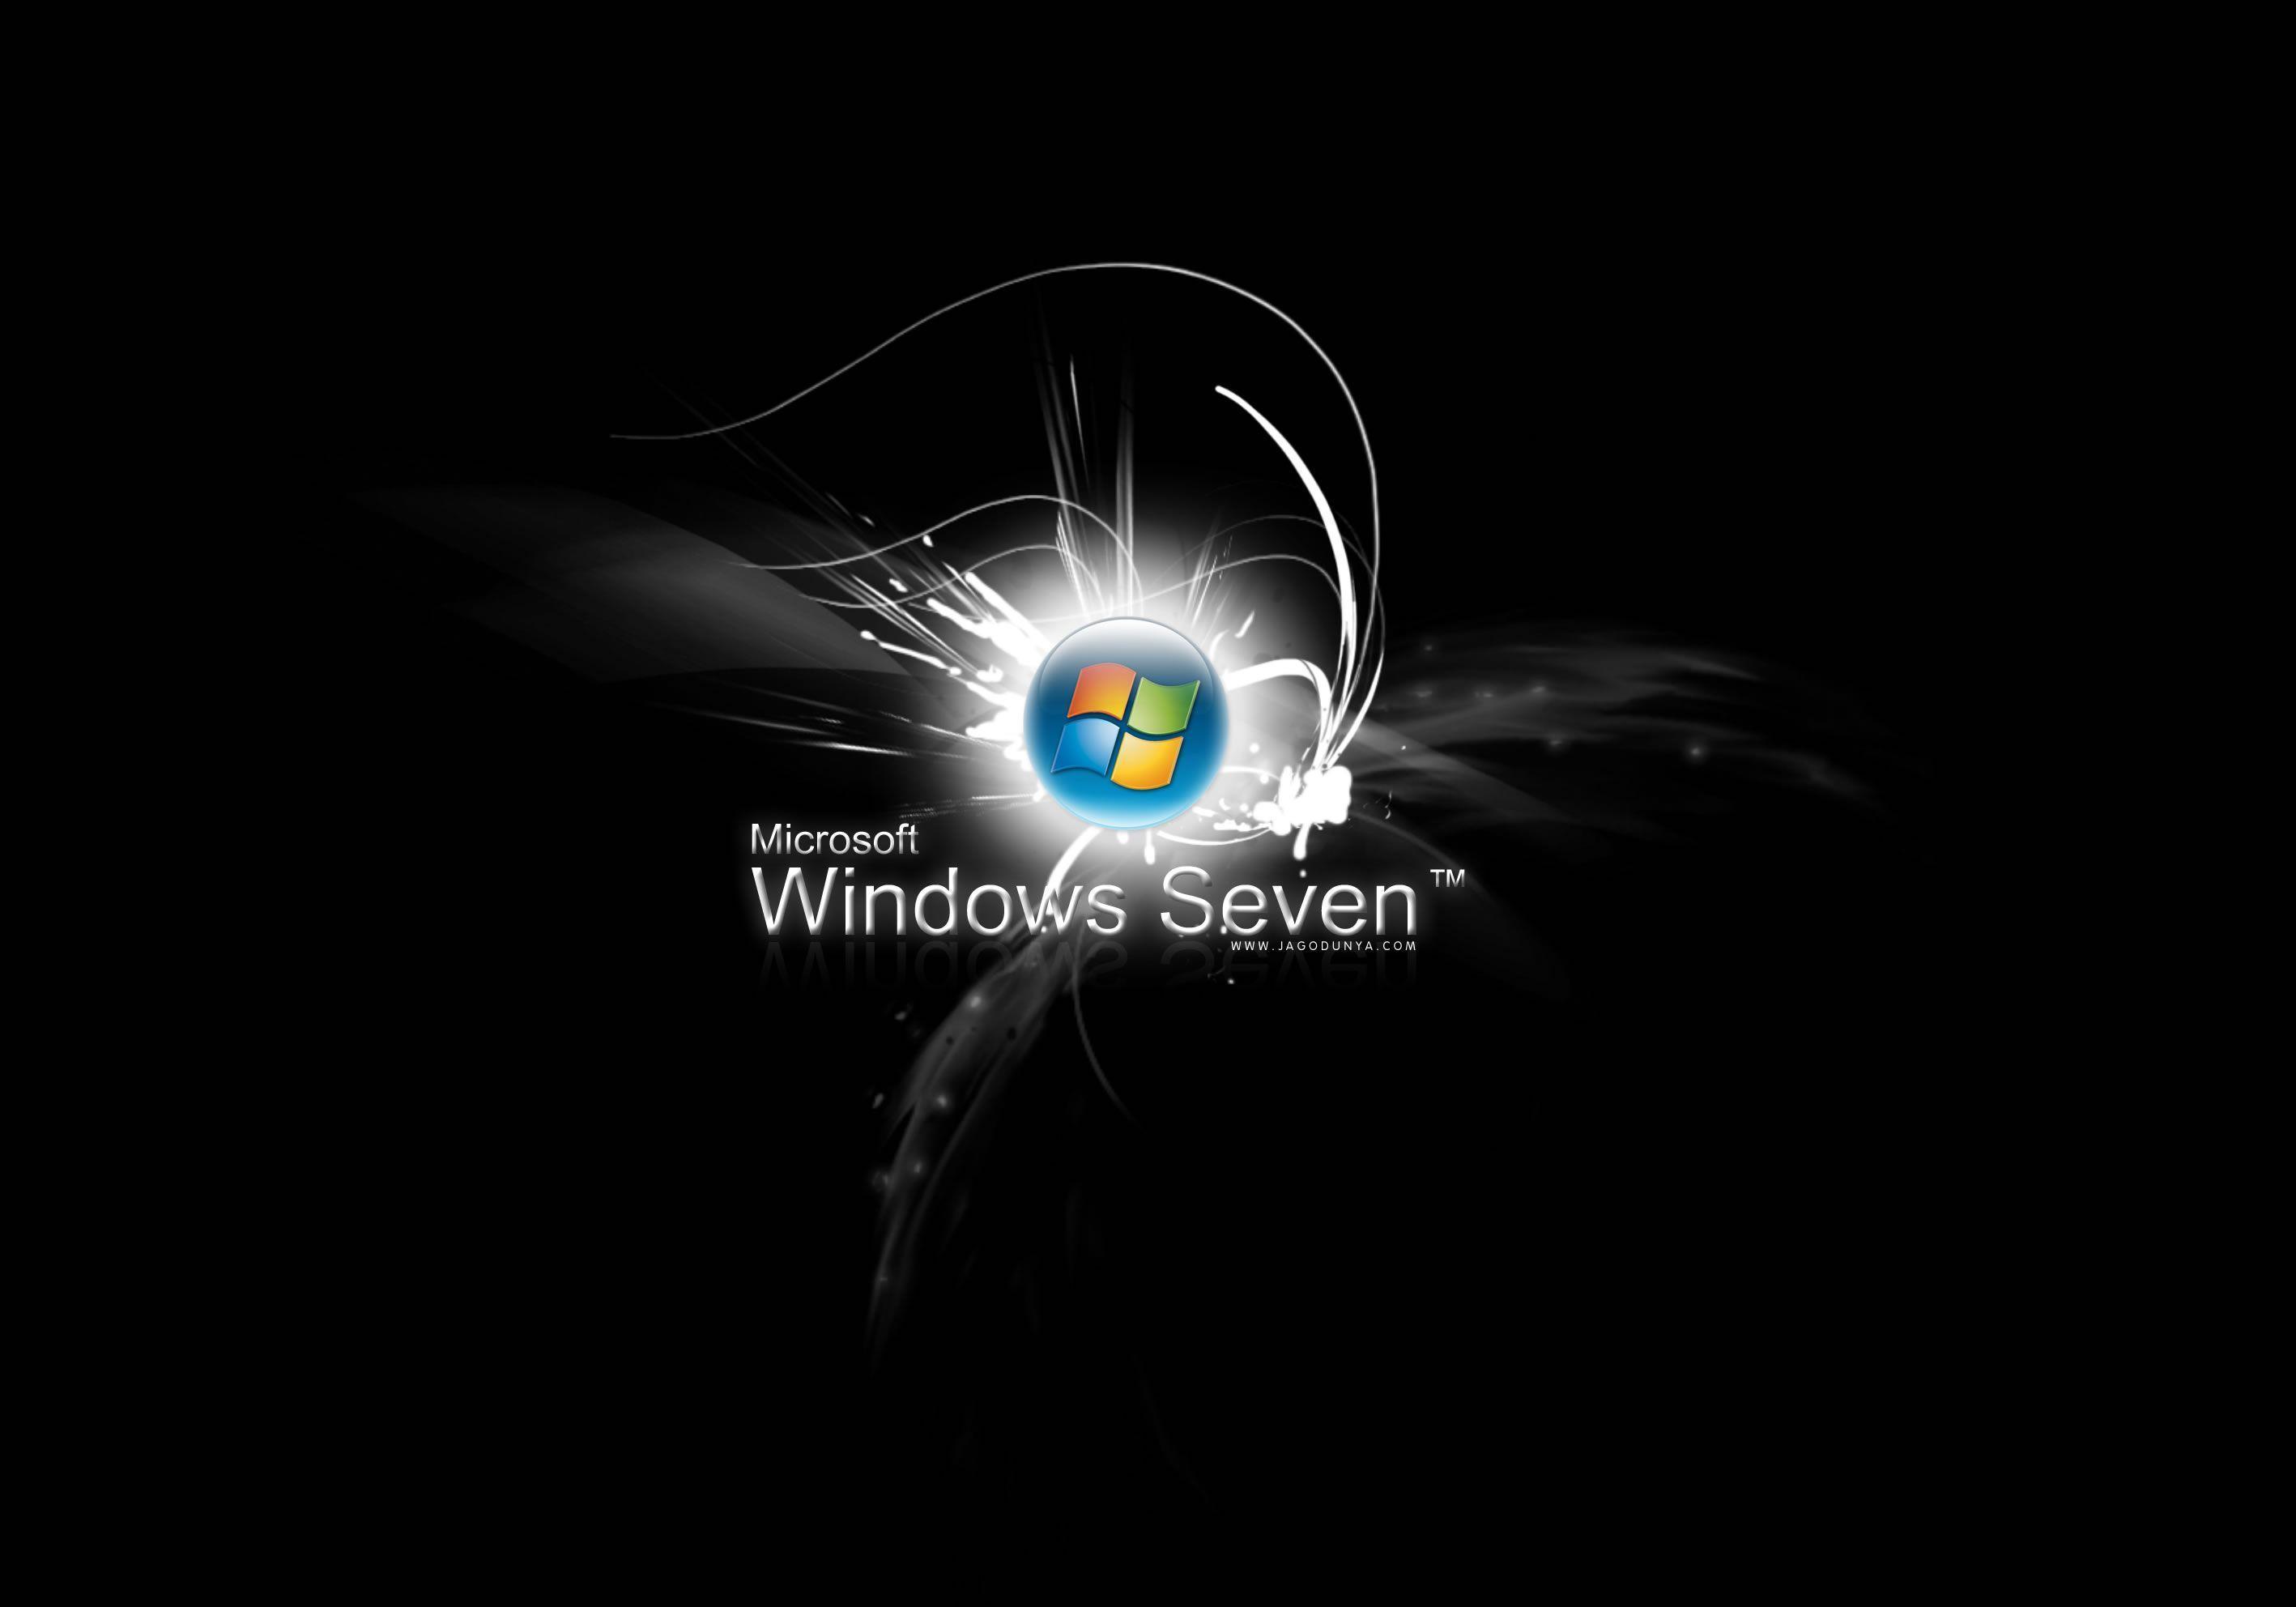 Wallpaper For > Windows 7 Wallpaper Widescreen Black